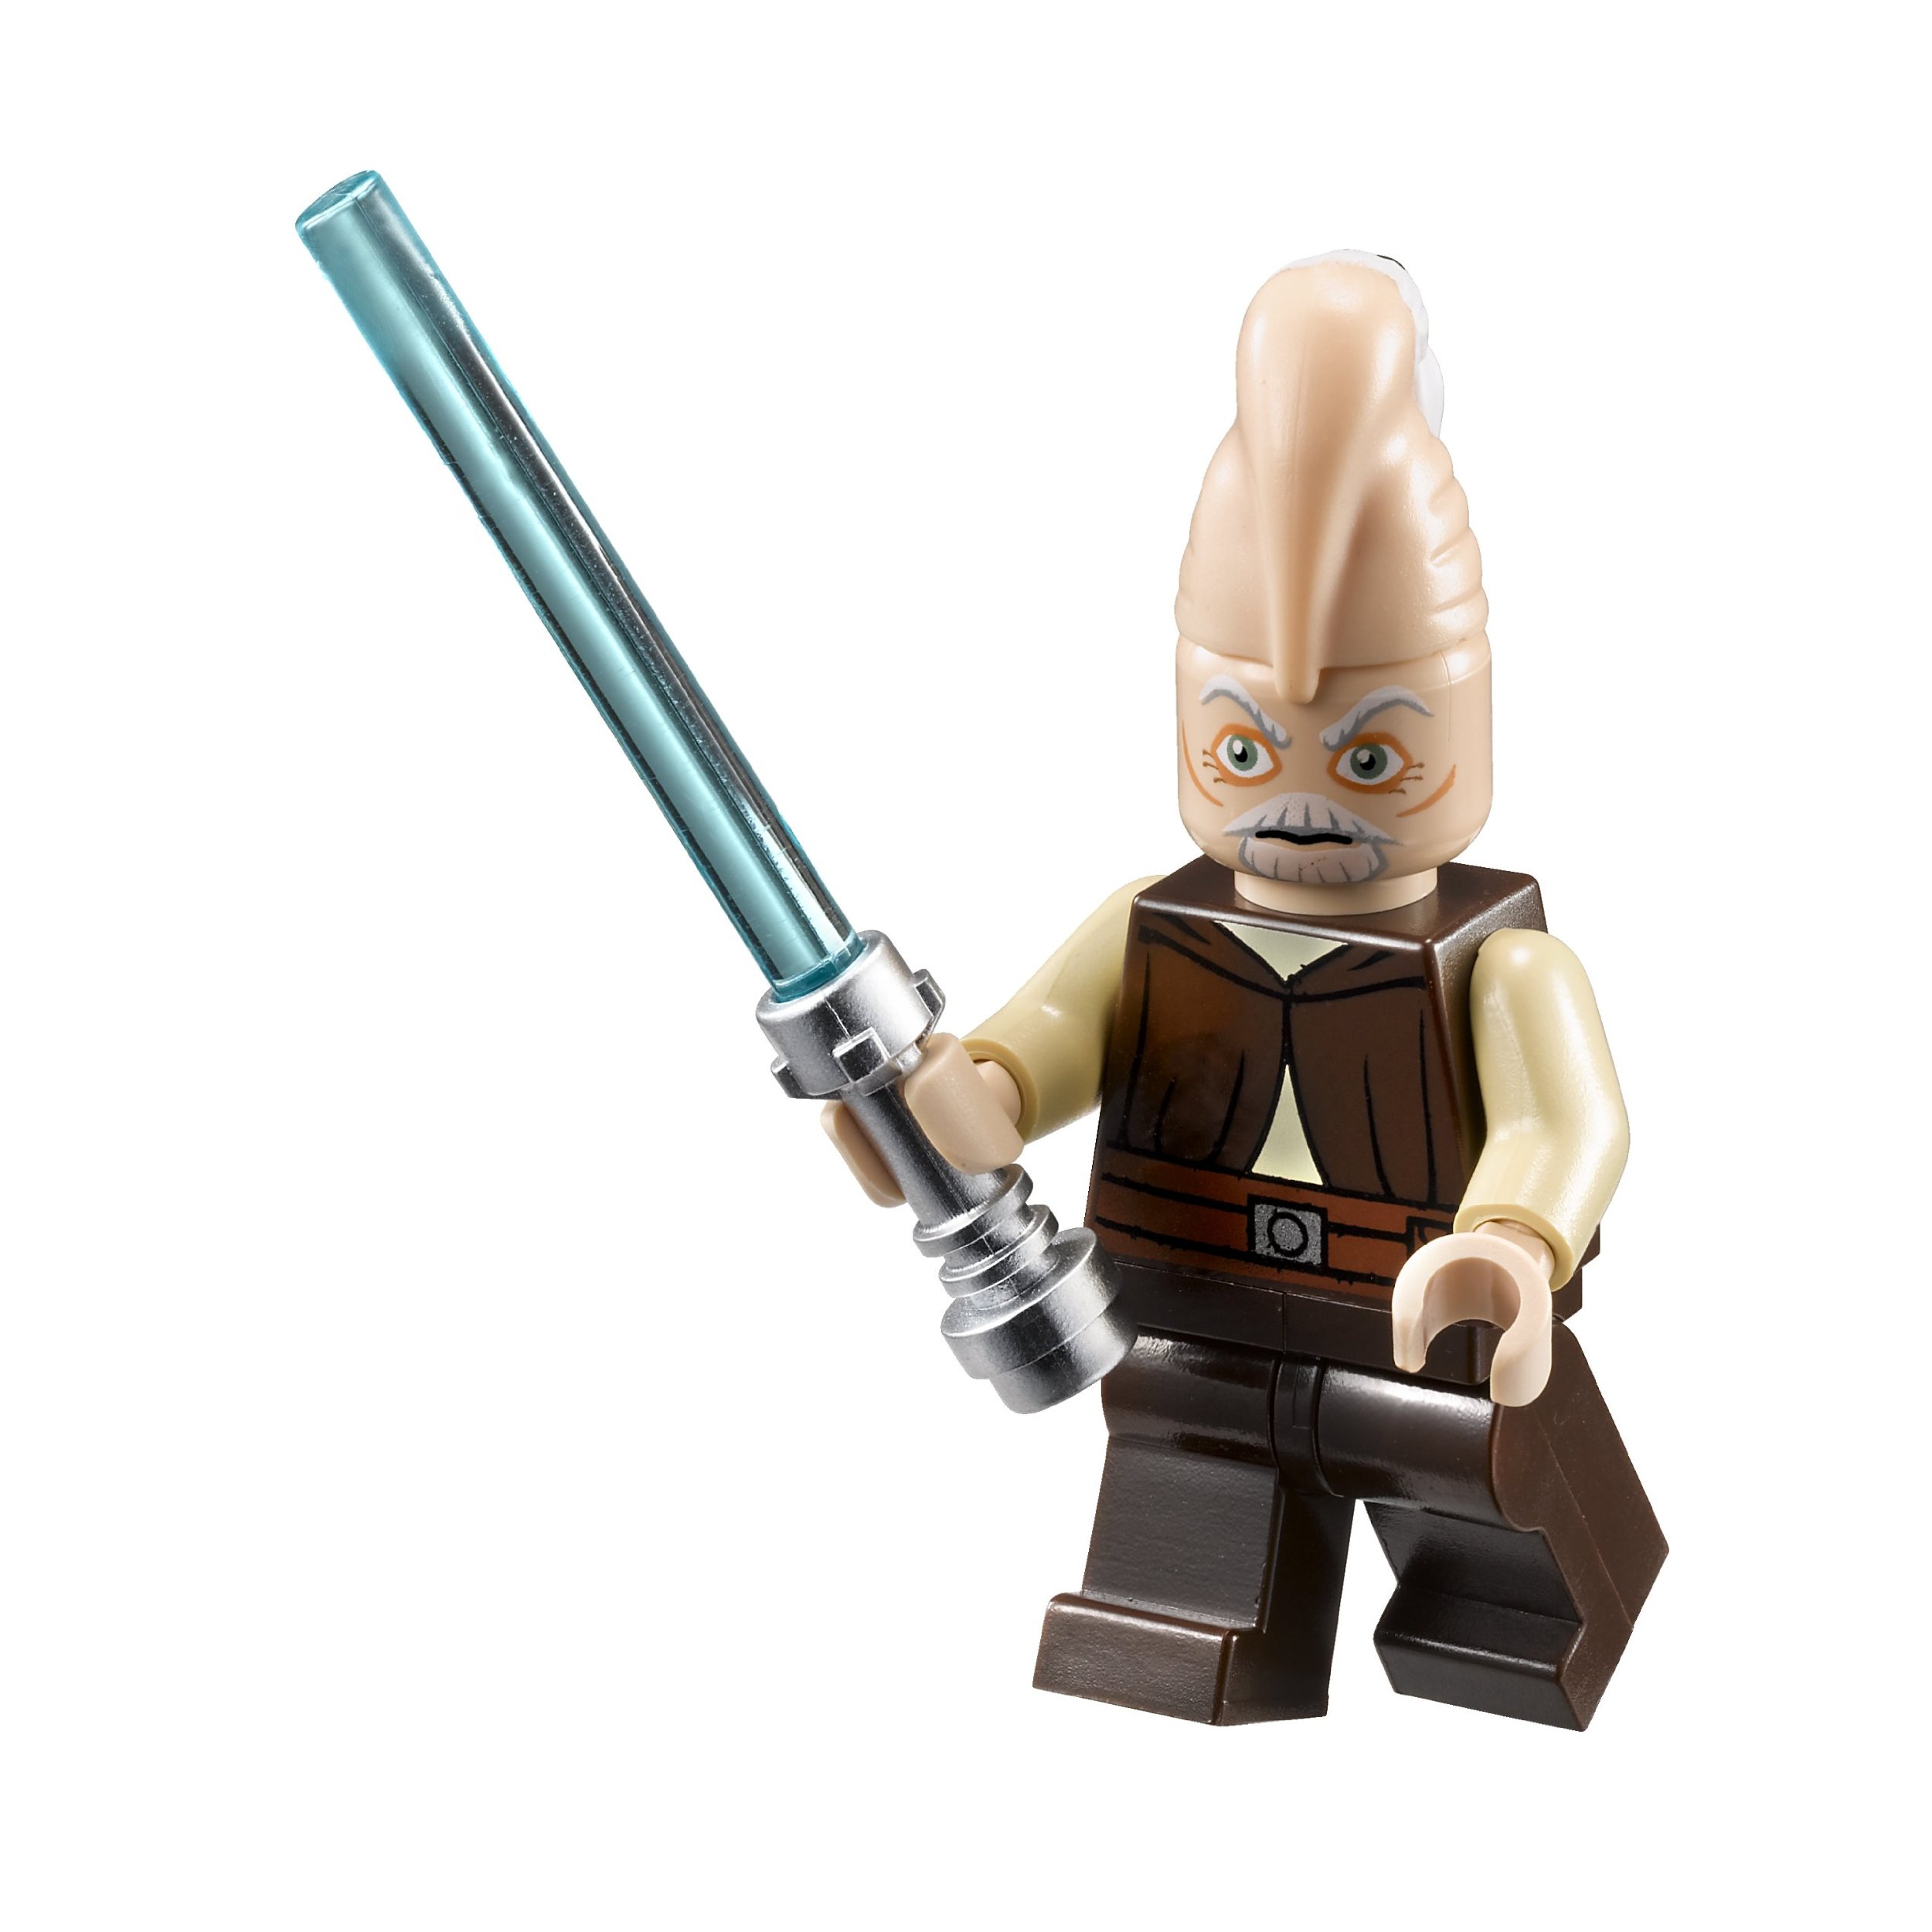 Ki-Adi Mundi | Lego Star Wars Wiki |